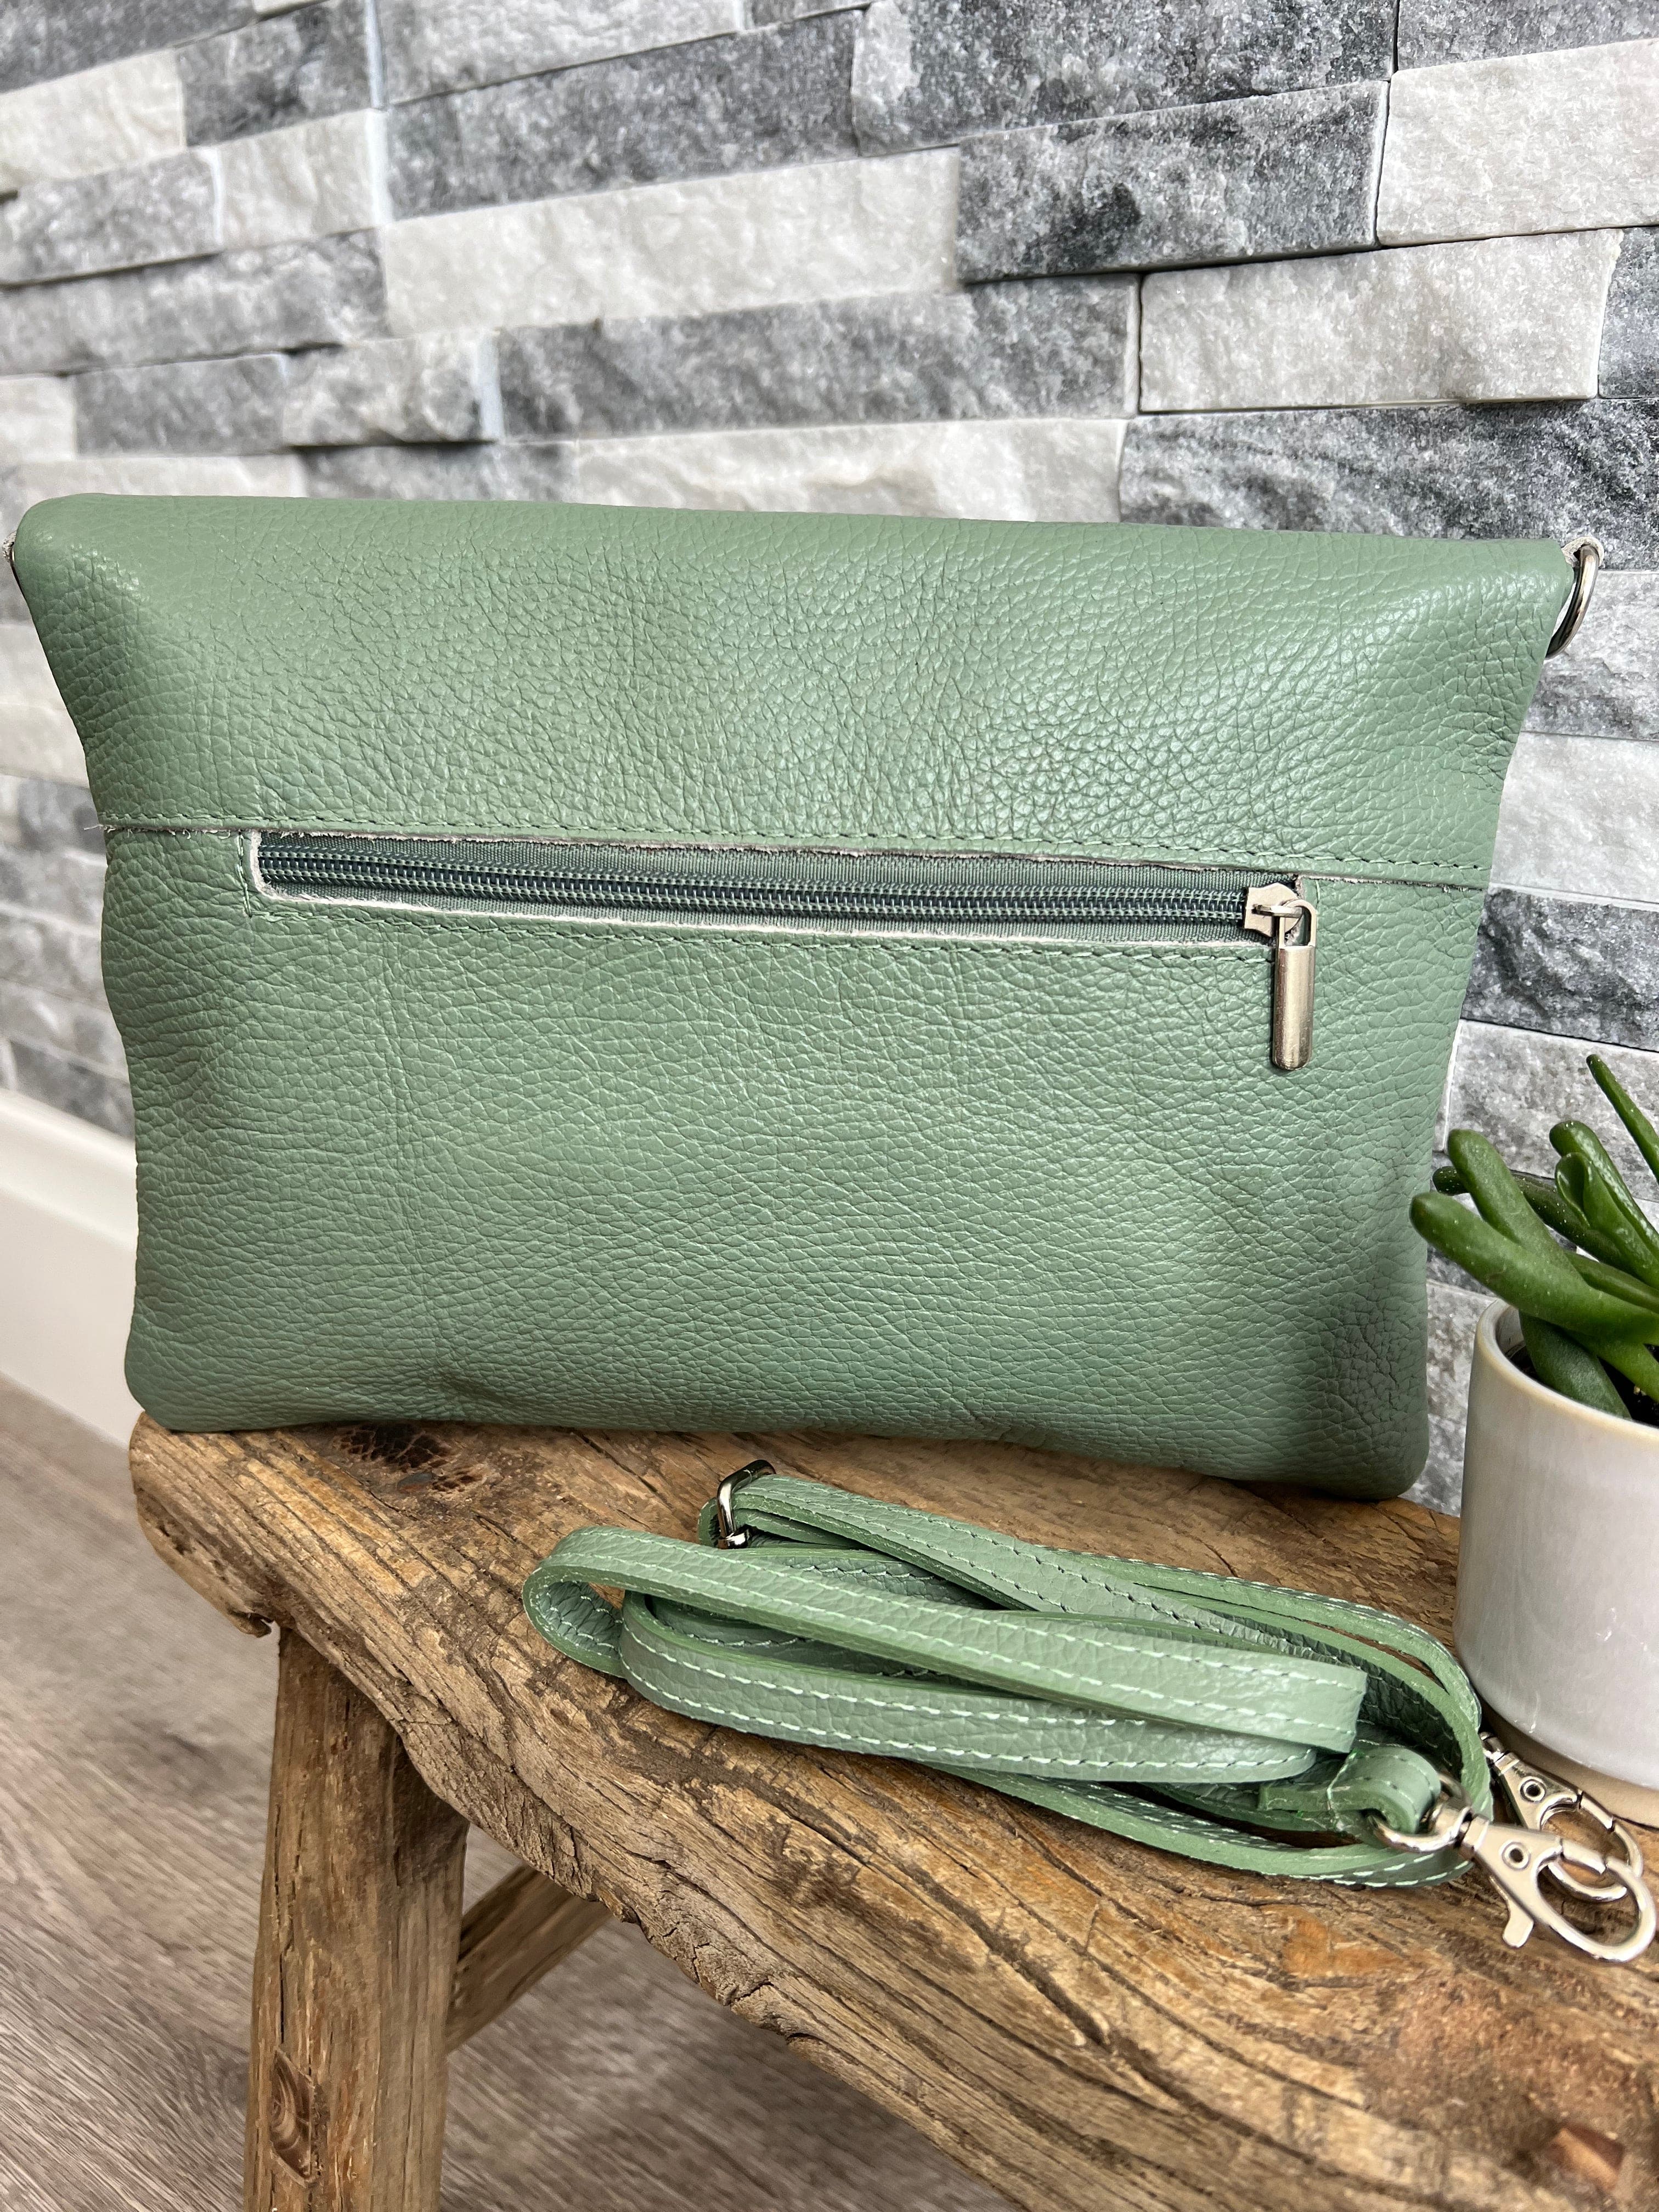 lusciousscarves Handbags Pale Green Genuine Leather Clutch Bag